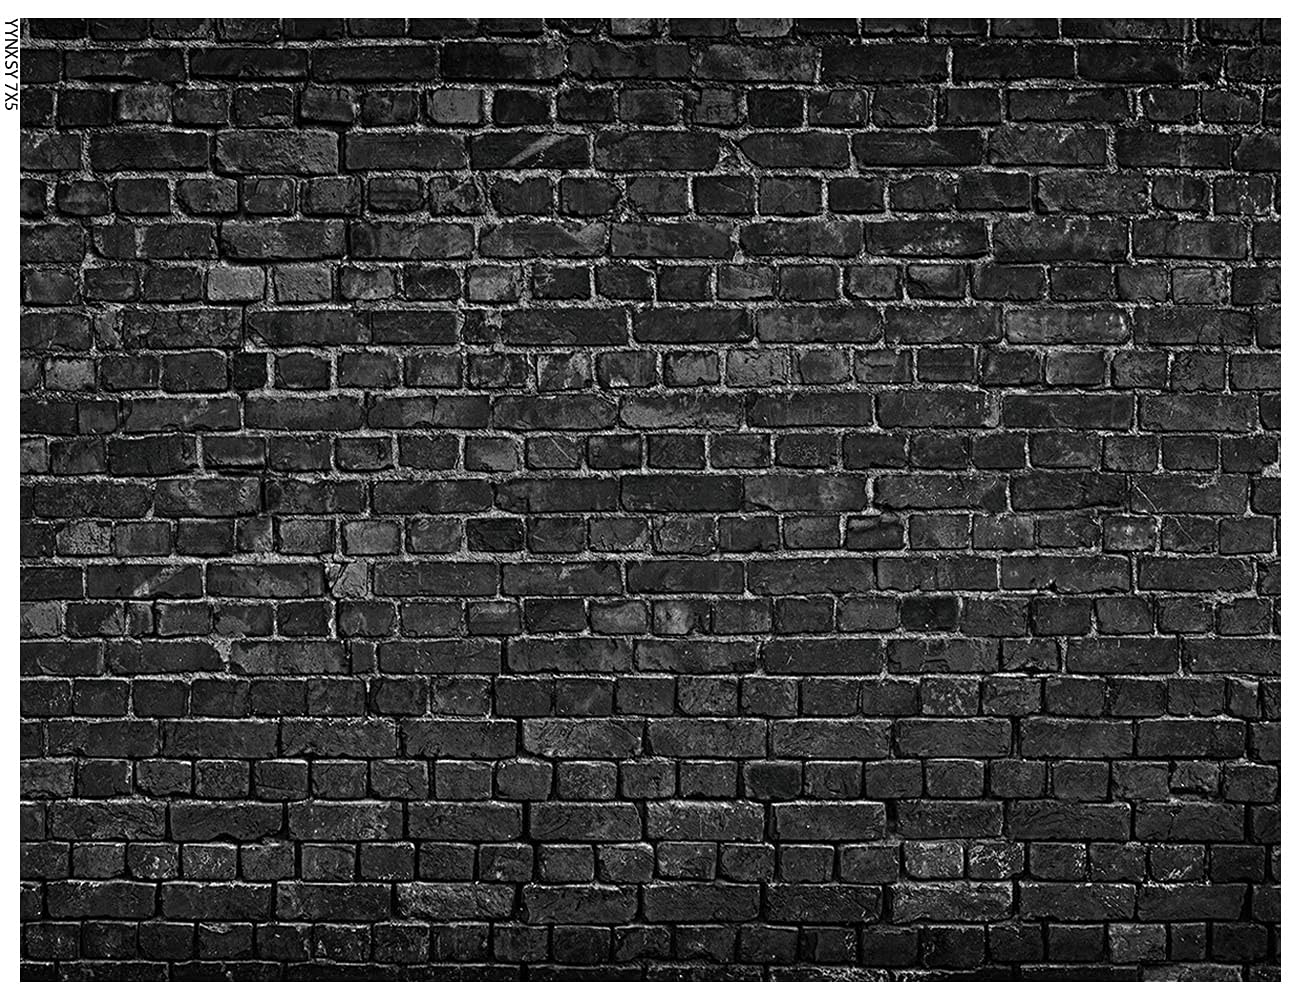 YYNXSY 7X5FT Black Brick Wall Background Photography Props Brick Birthday Party Decoration Background Photography Studio Decoration Background Room Decoration bannerYY-1